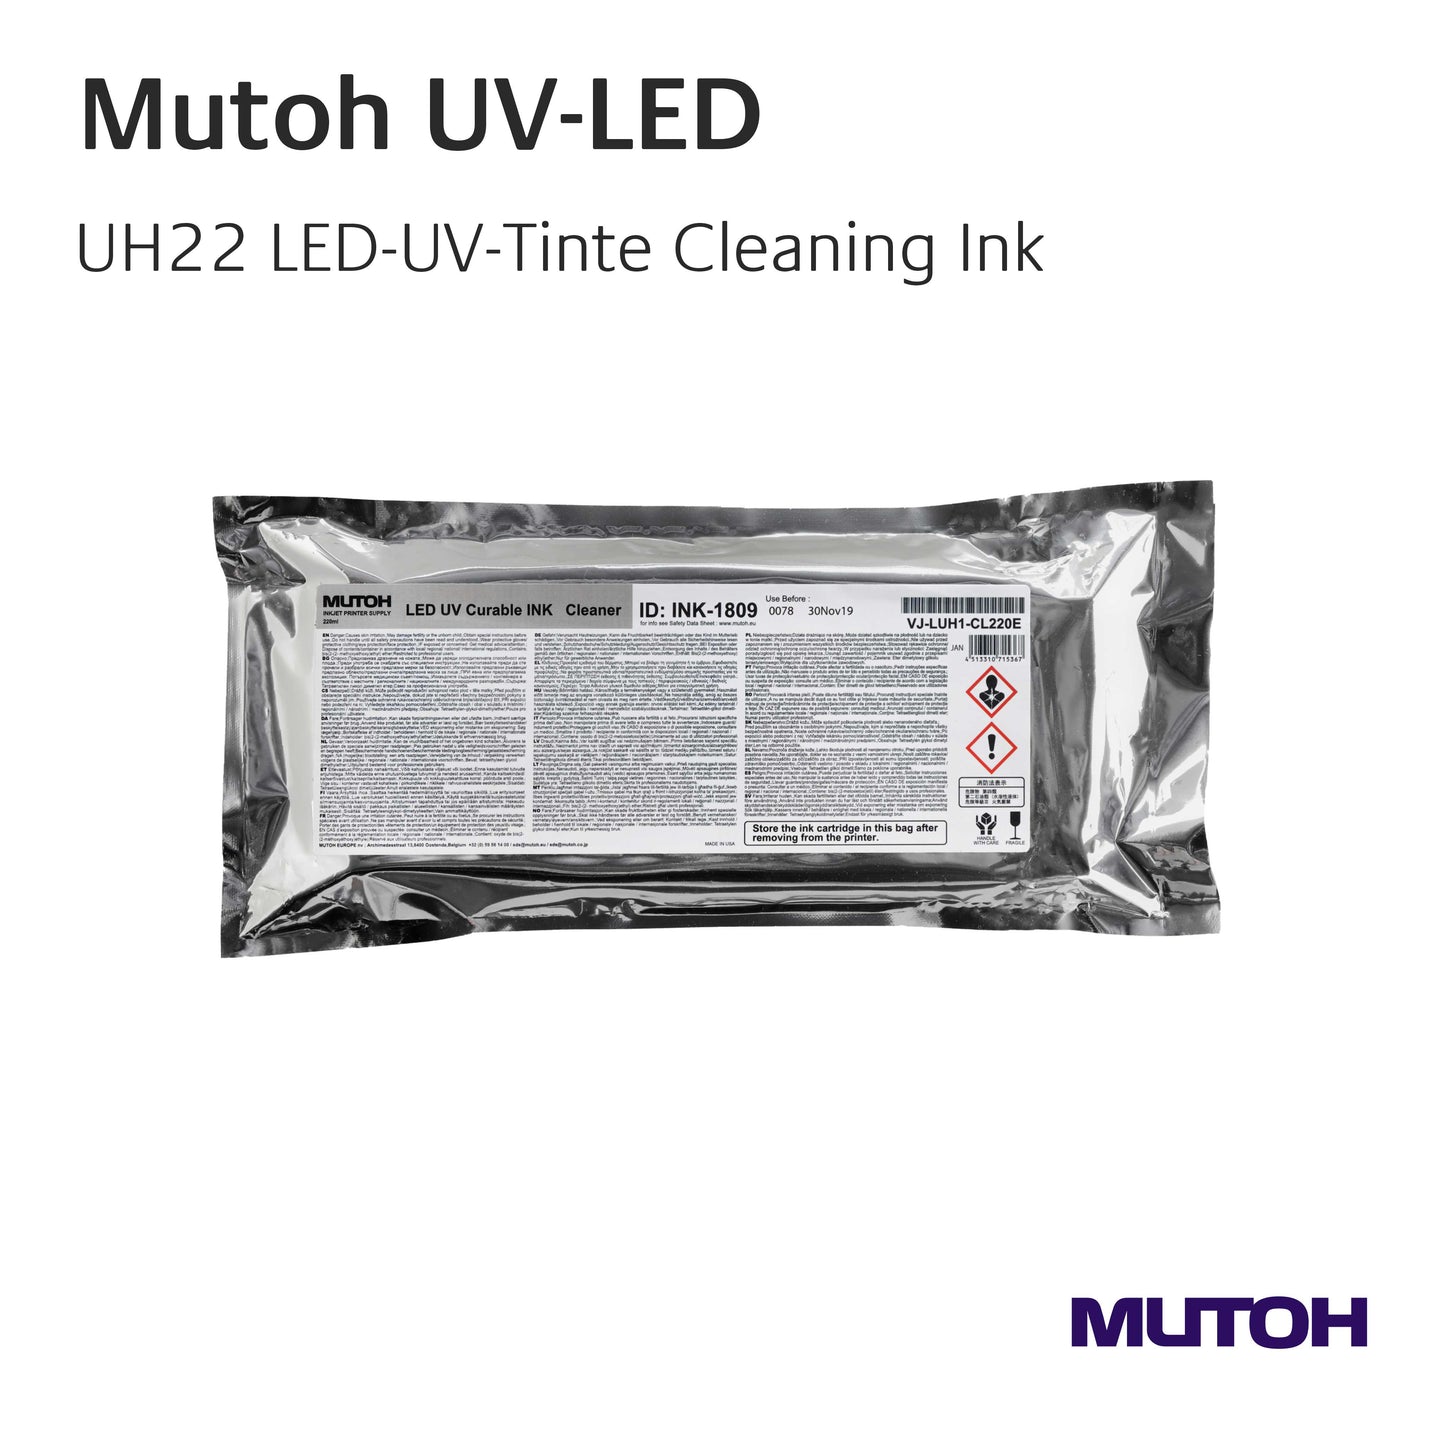 Mutoh - UH21 starre LED-UV-Tinten